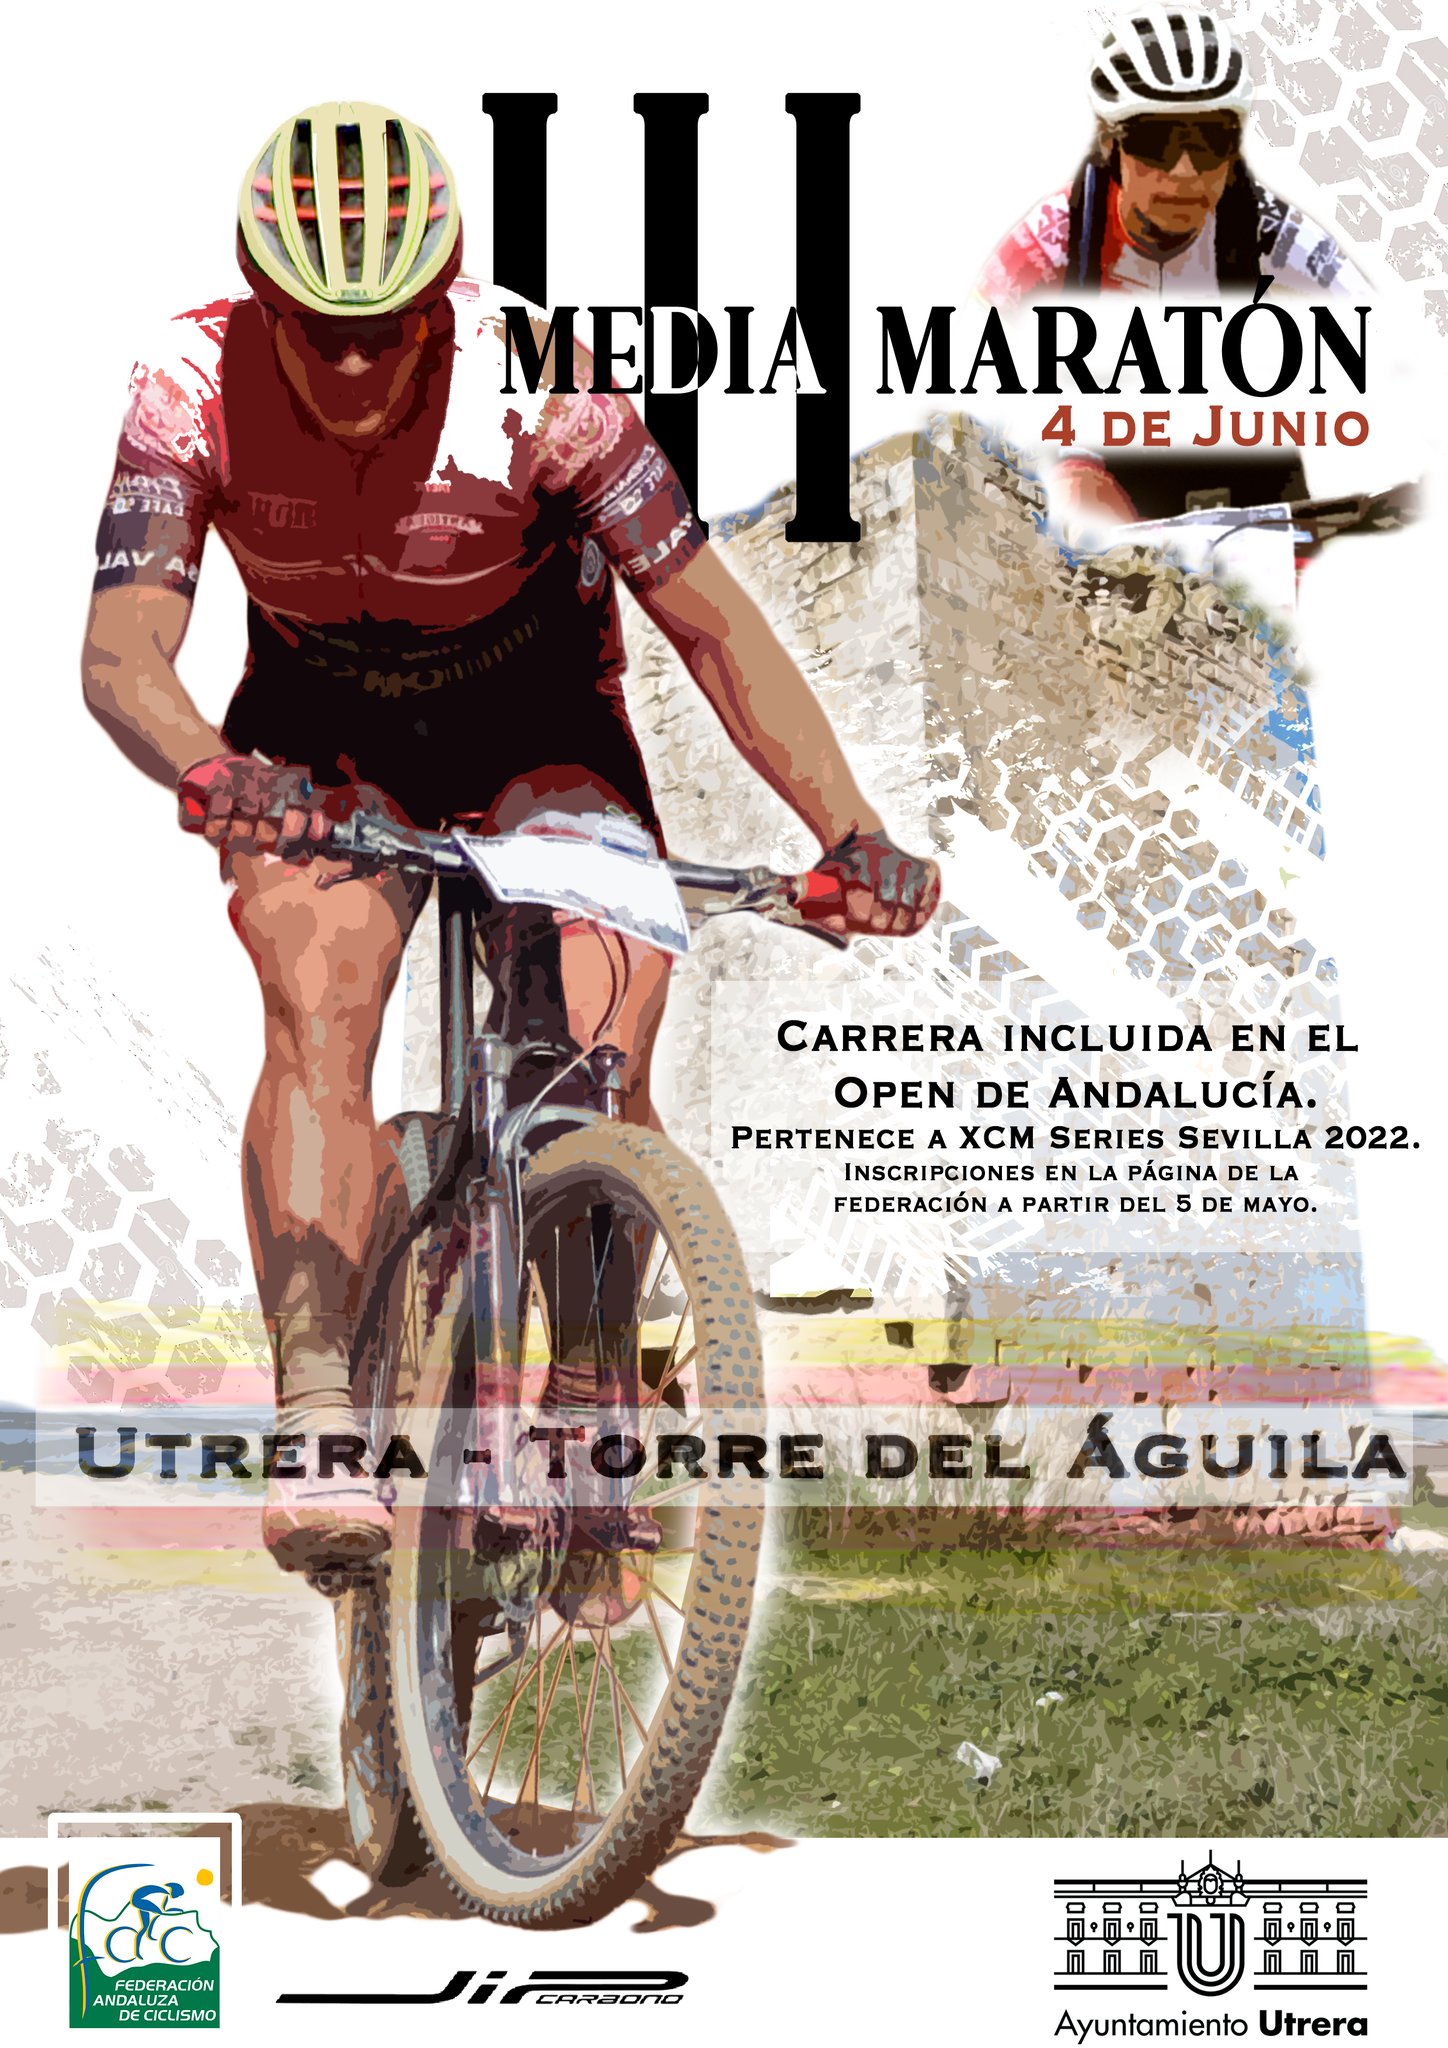 Todo preparado para la III Media Maratón de Mountain Bike Utrera – Torre del Águila este sábado